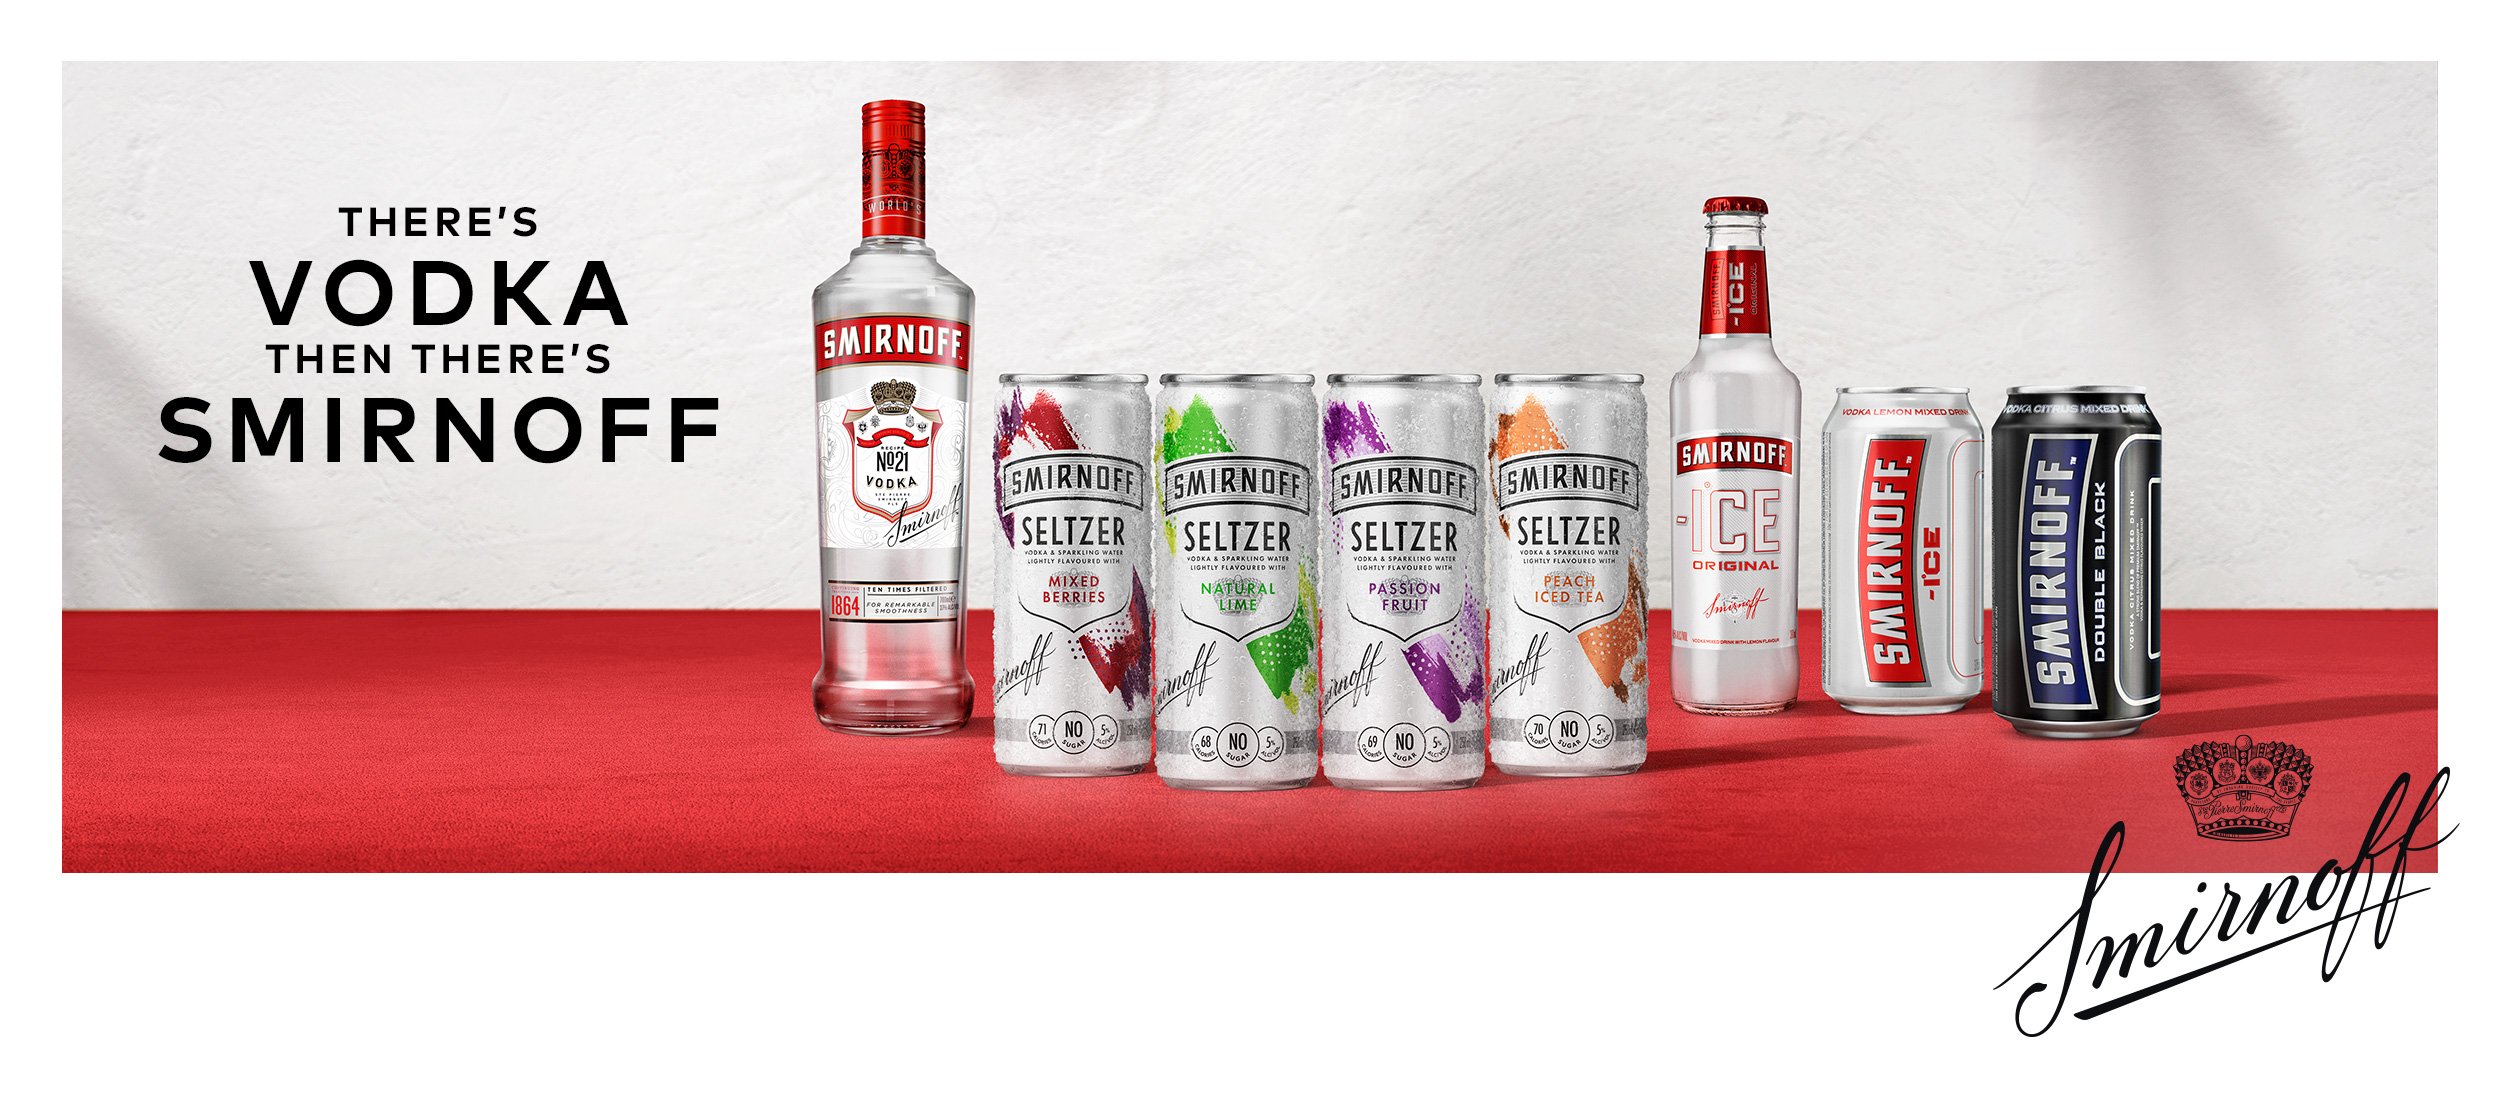 Purchase Vodka Poliakov Premium 2 liters Big Bottles Online - Low